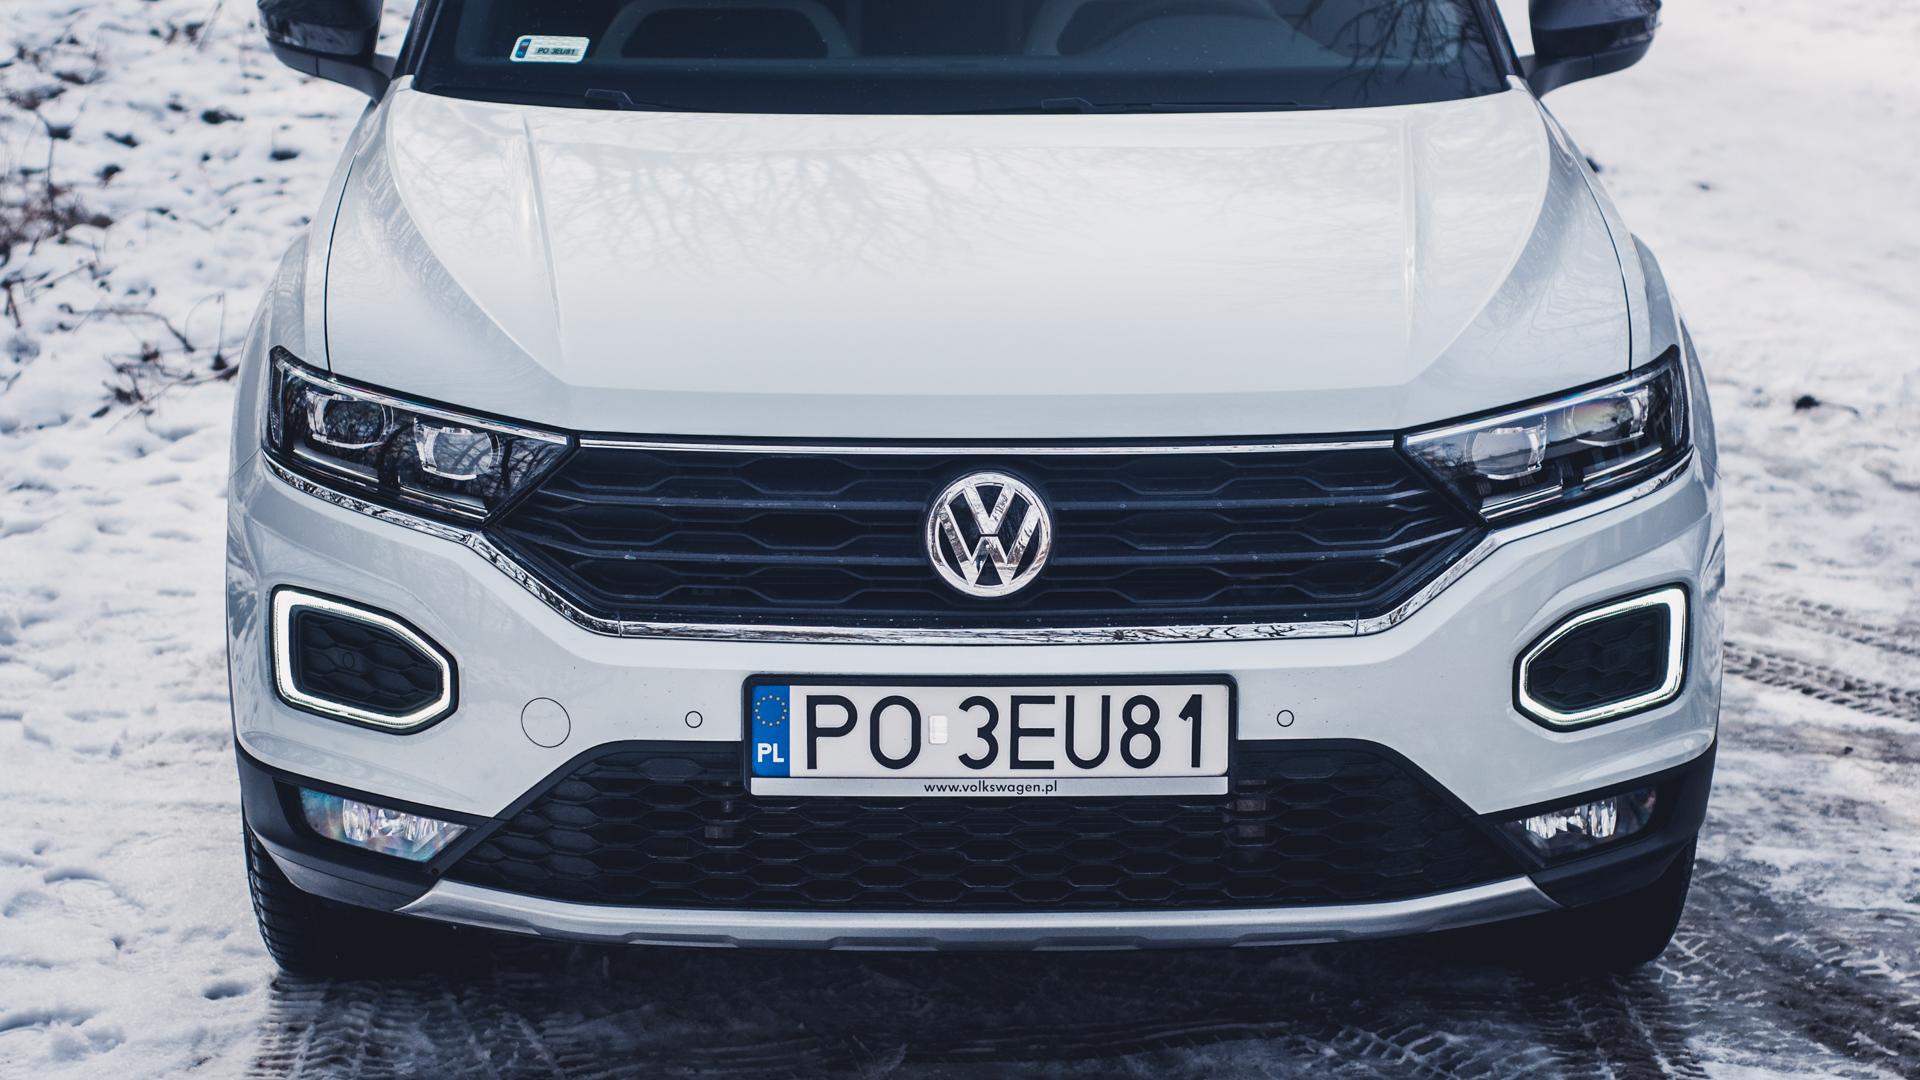 Volkswagen TRoc sport w modnym wydaniu • AutoCentrum.pl